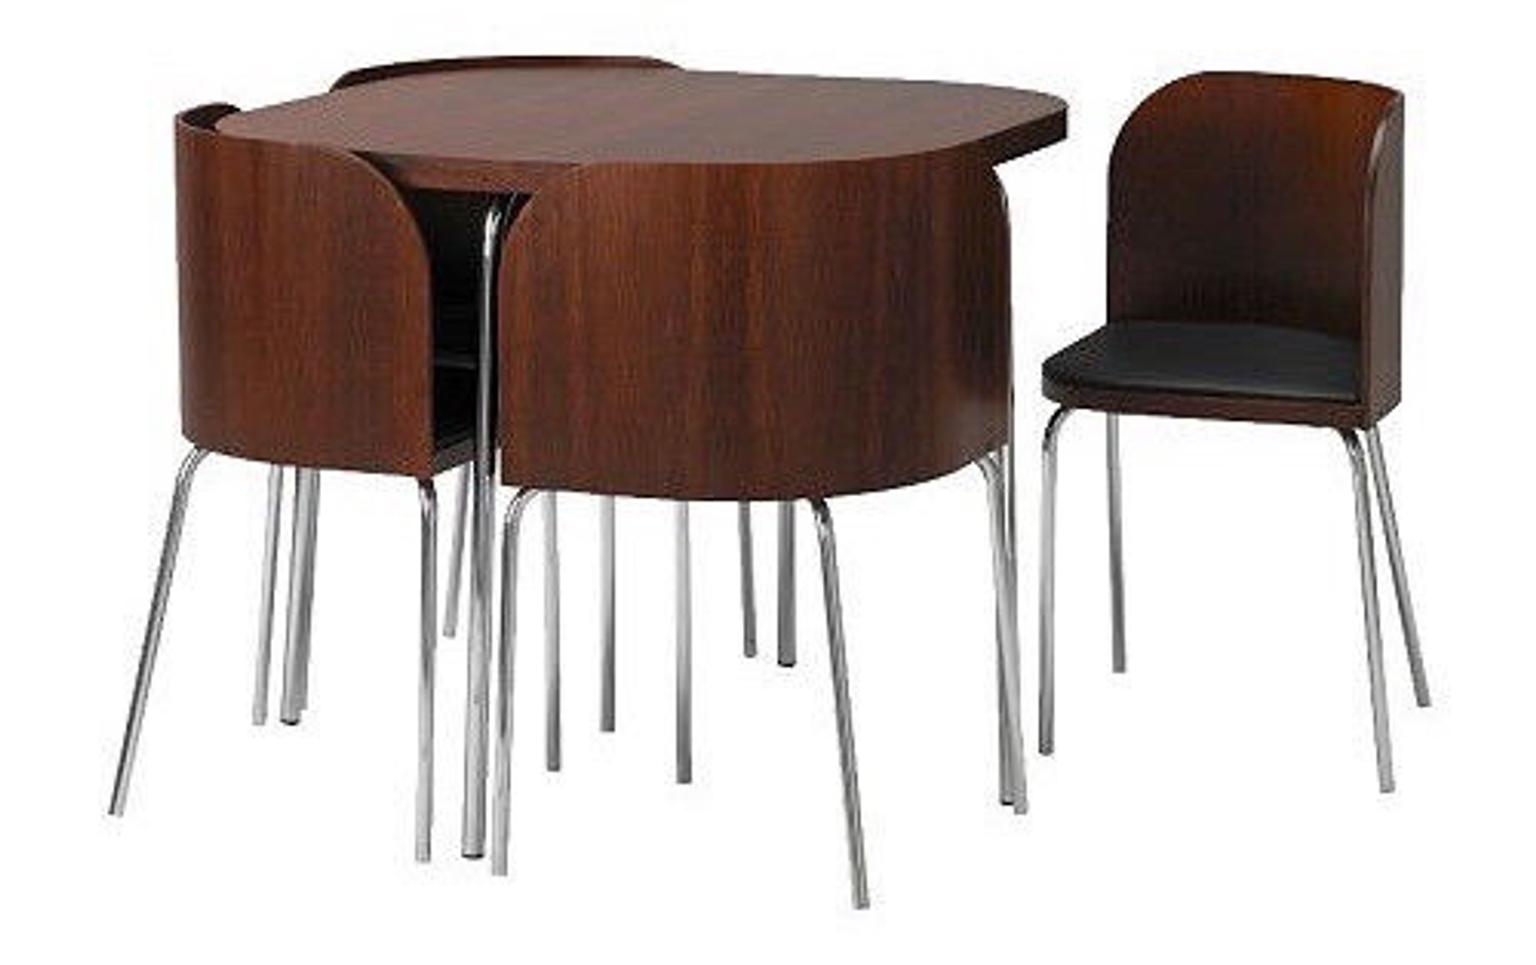 Table N Chairs Ikea